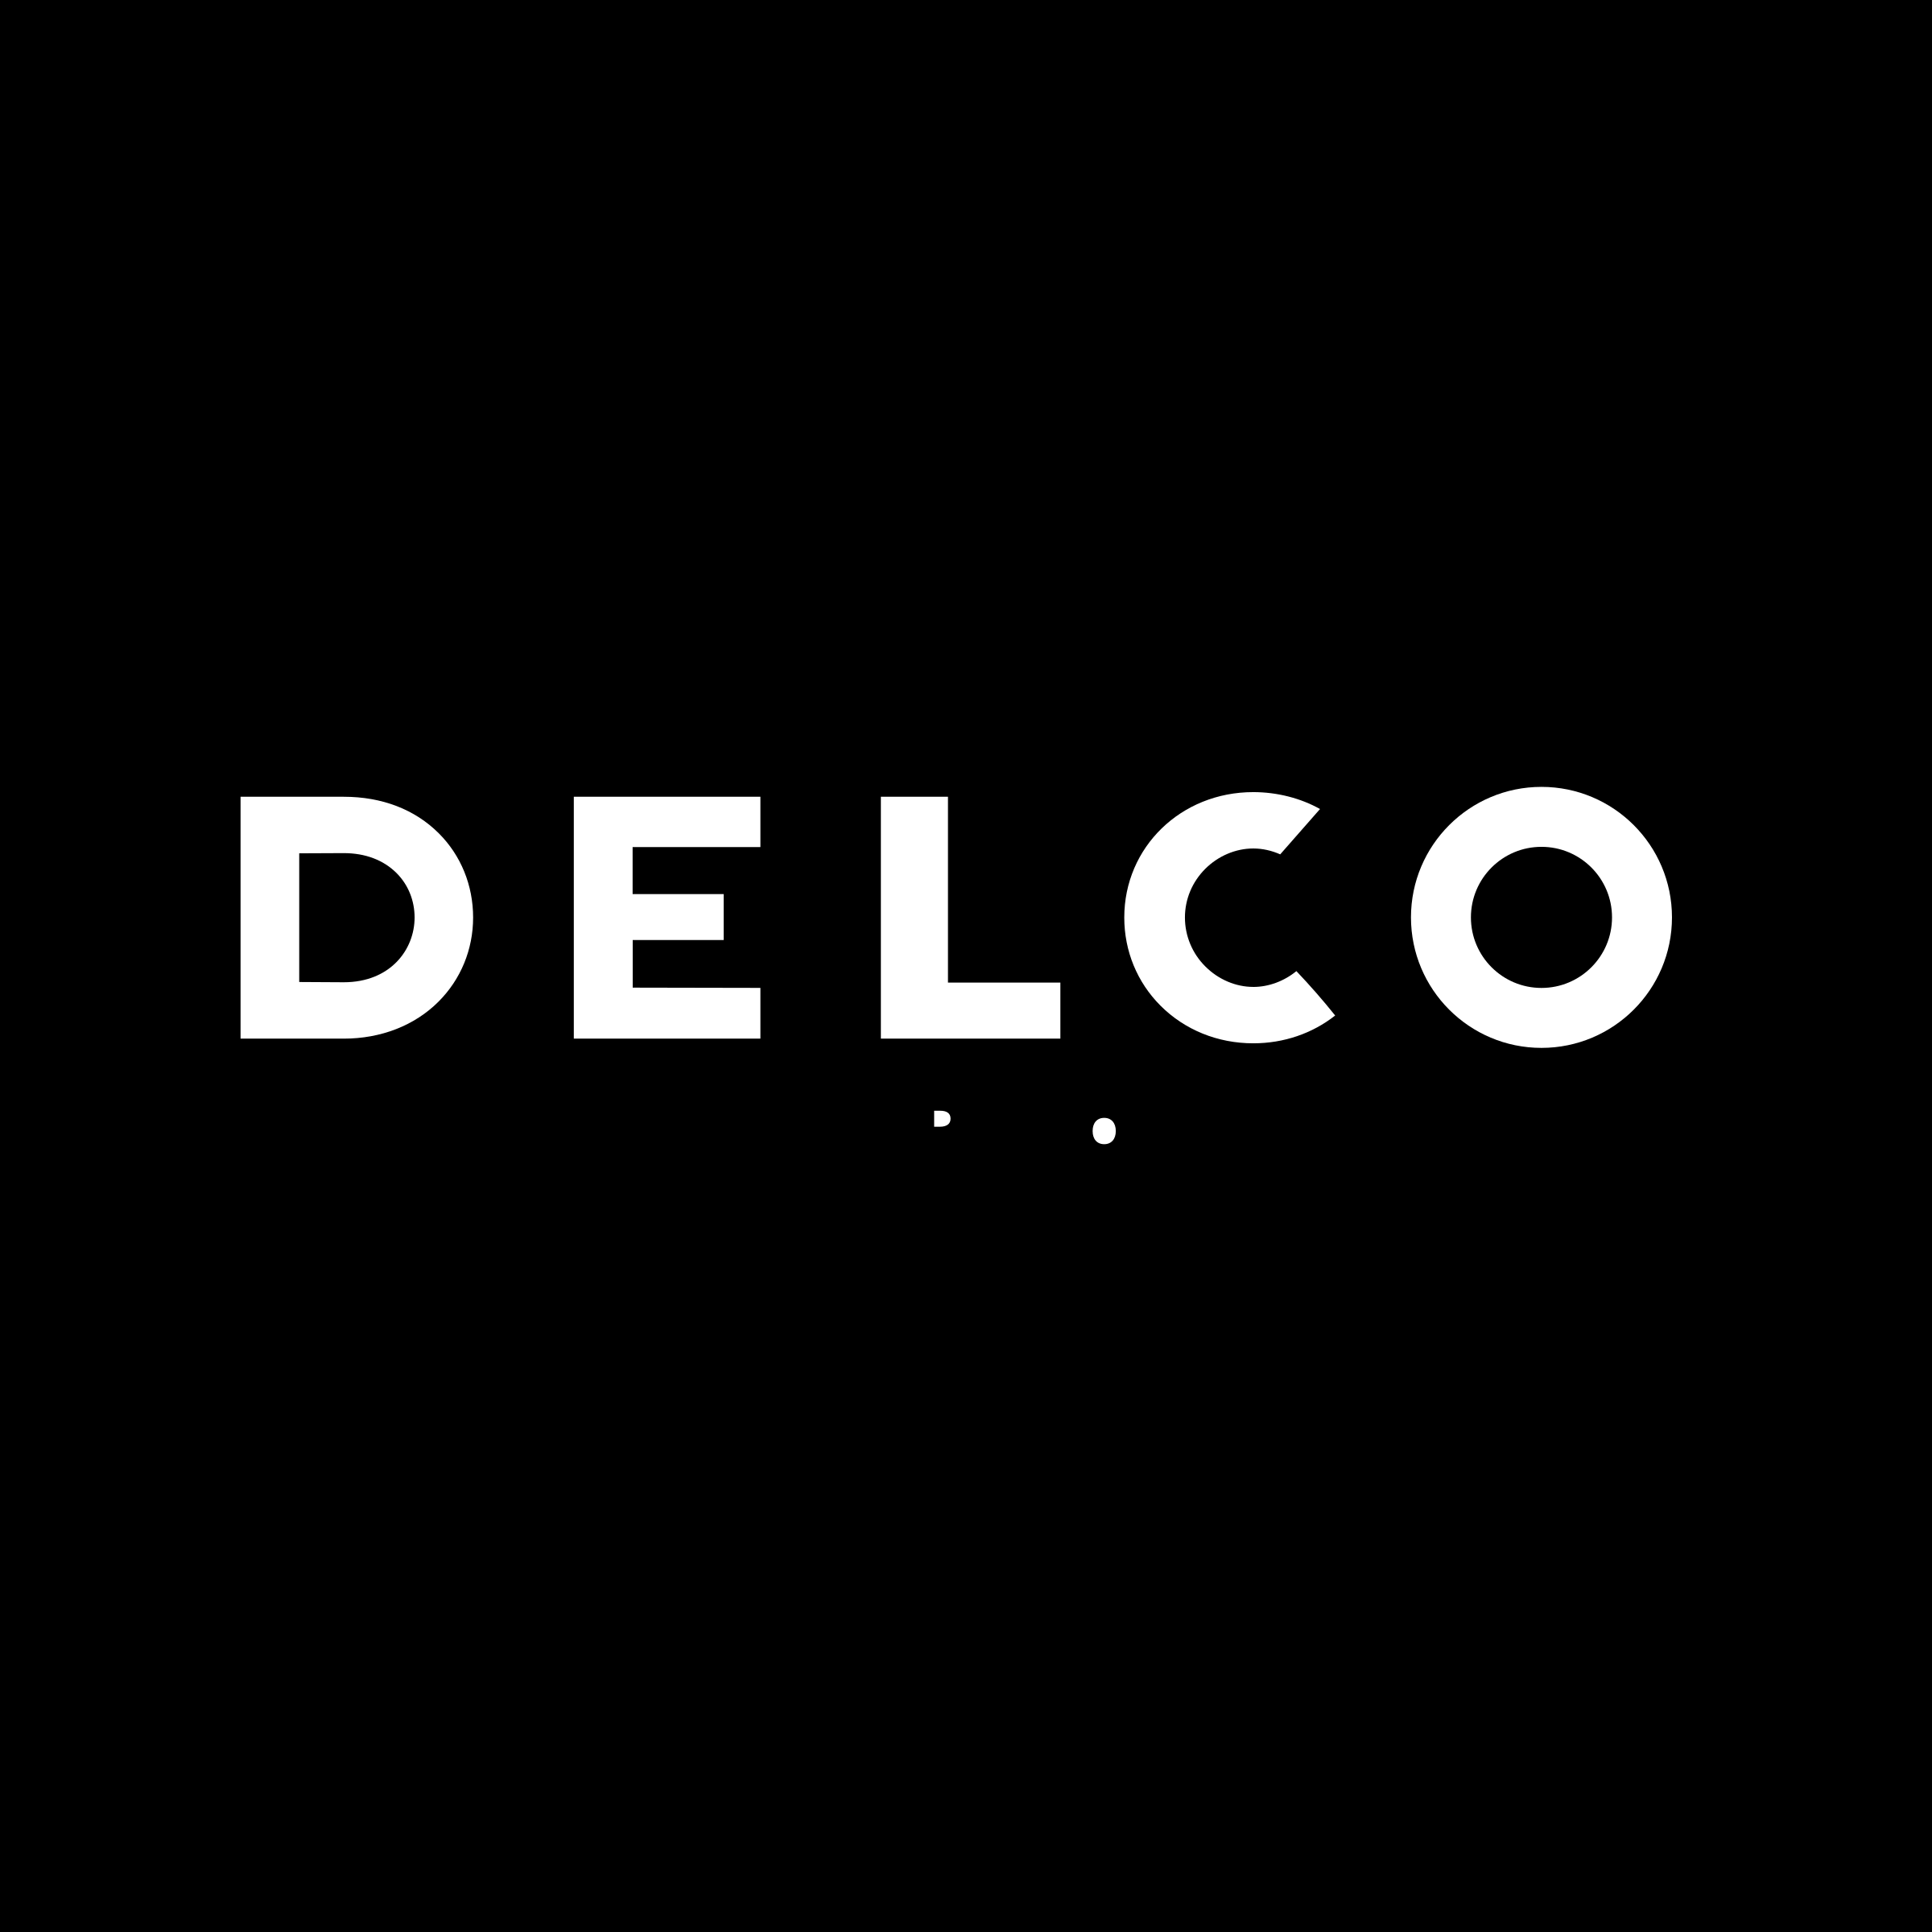 Delco Logo - Delco Electronics Logo PNG Transparent & SVG Vector - Freebie Supply